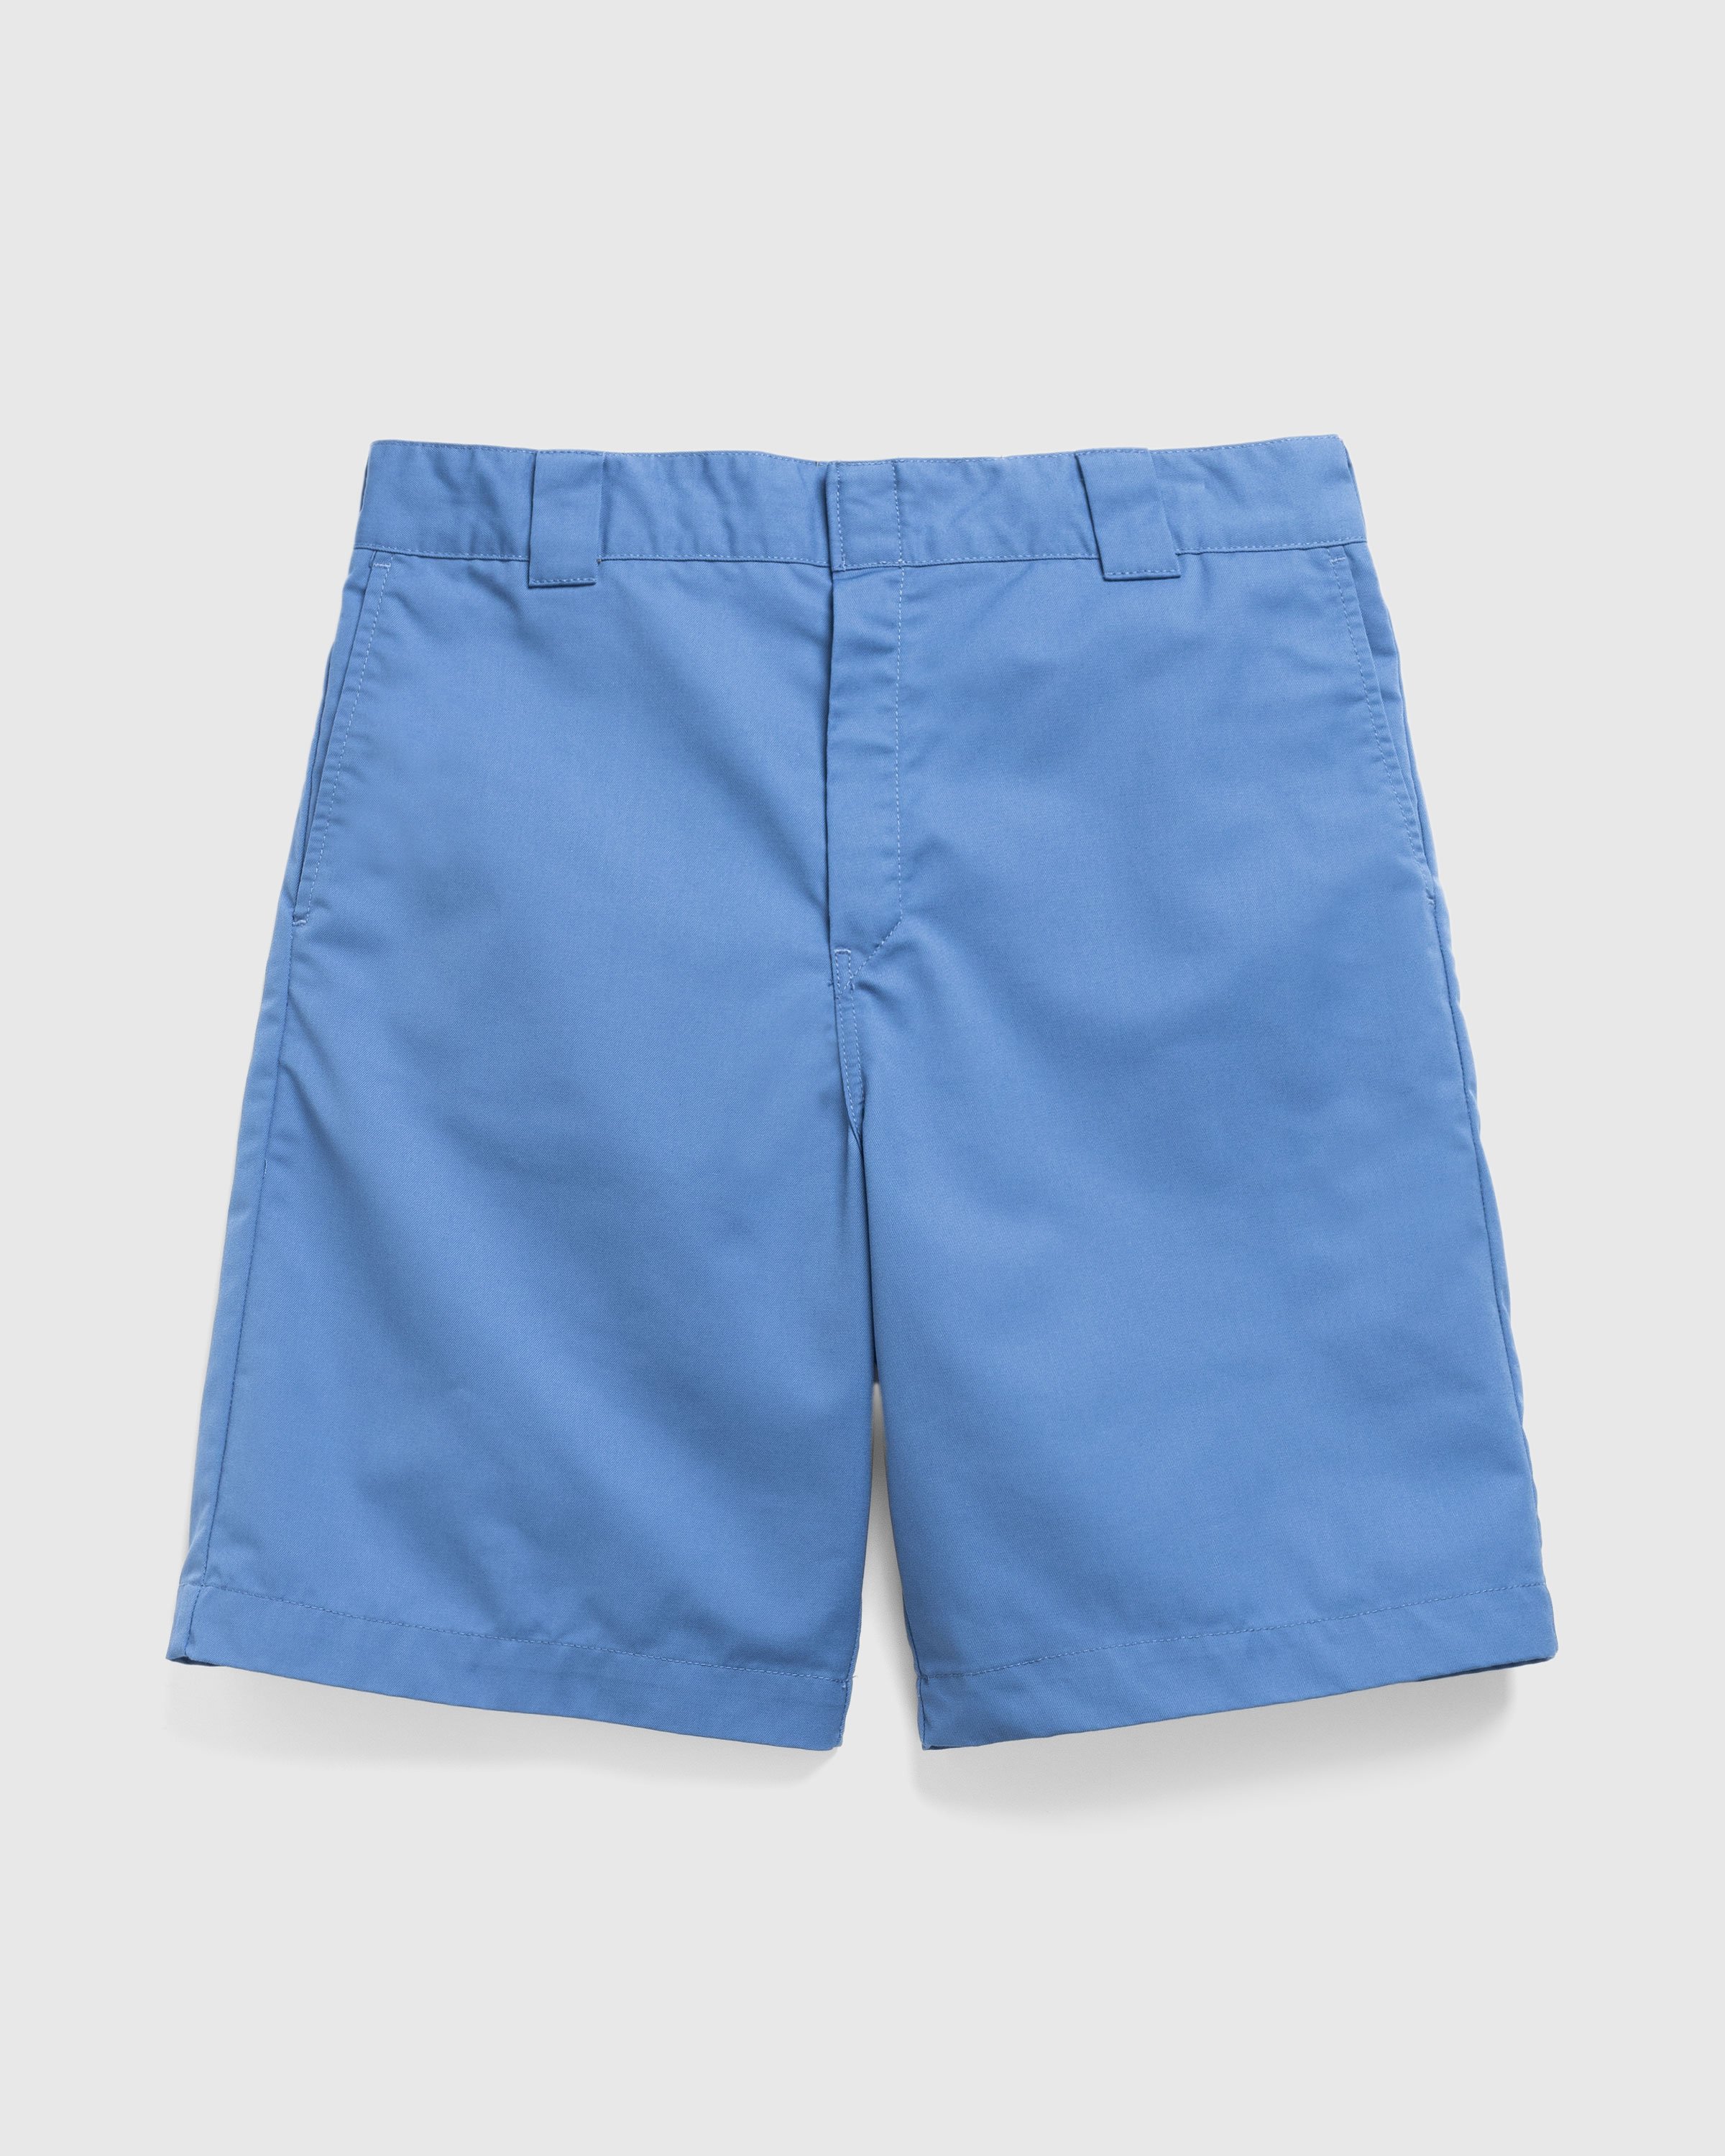 Carhartt WIP - Craft Short Sorrent /rinsed - Clothing - Blue - Image 1